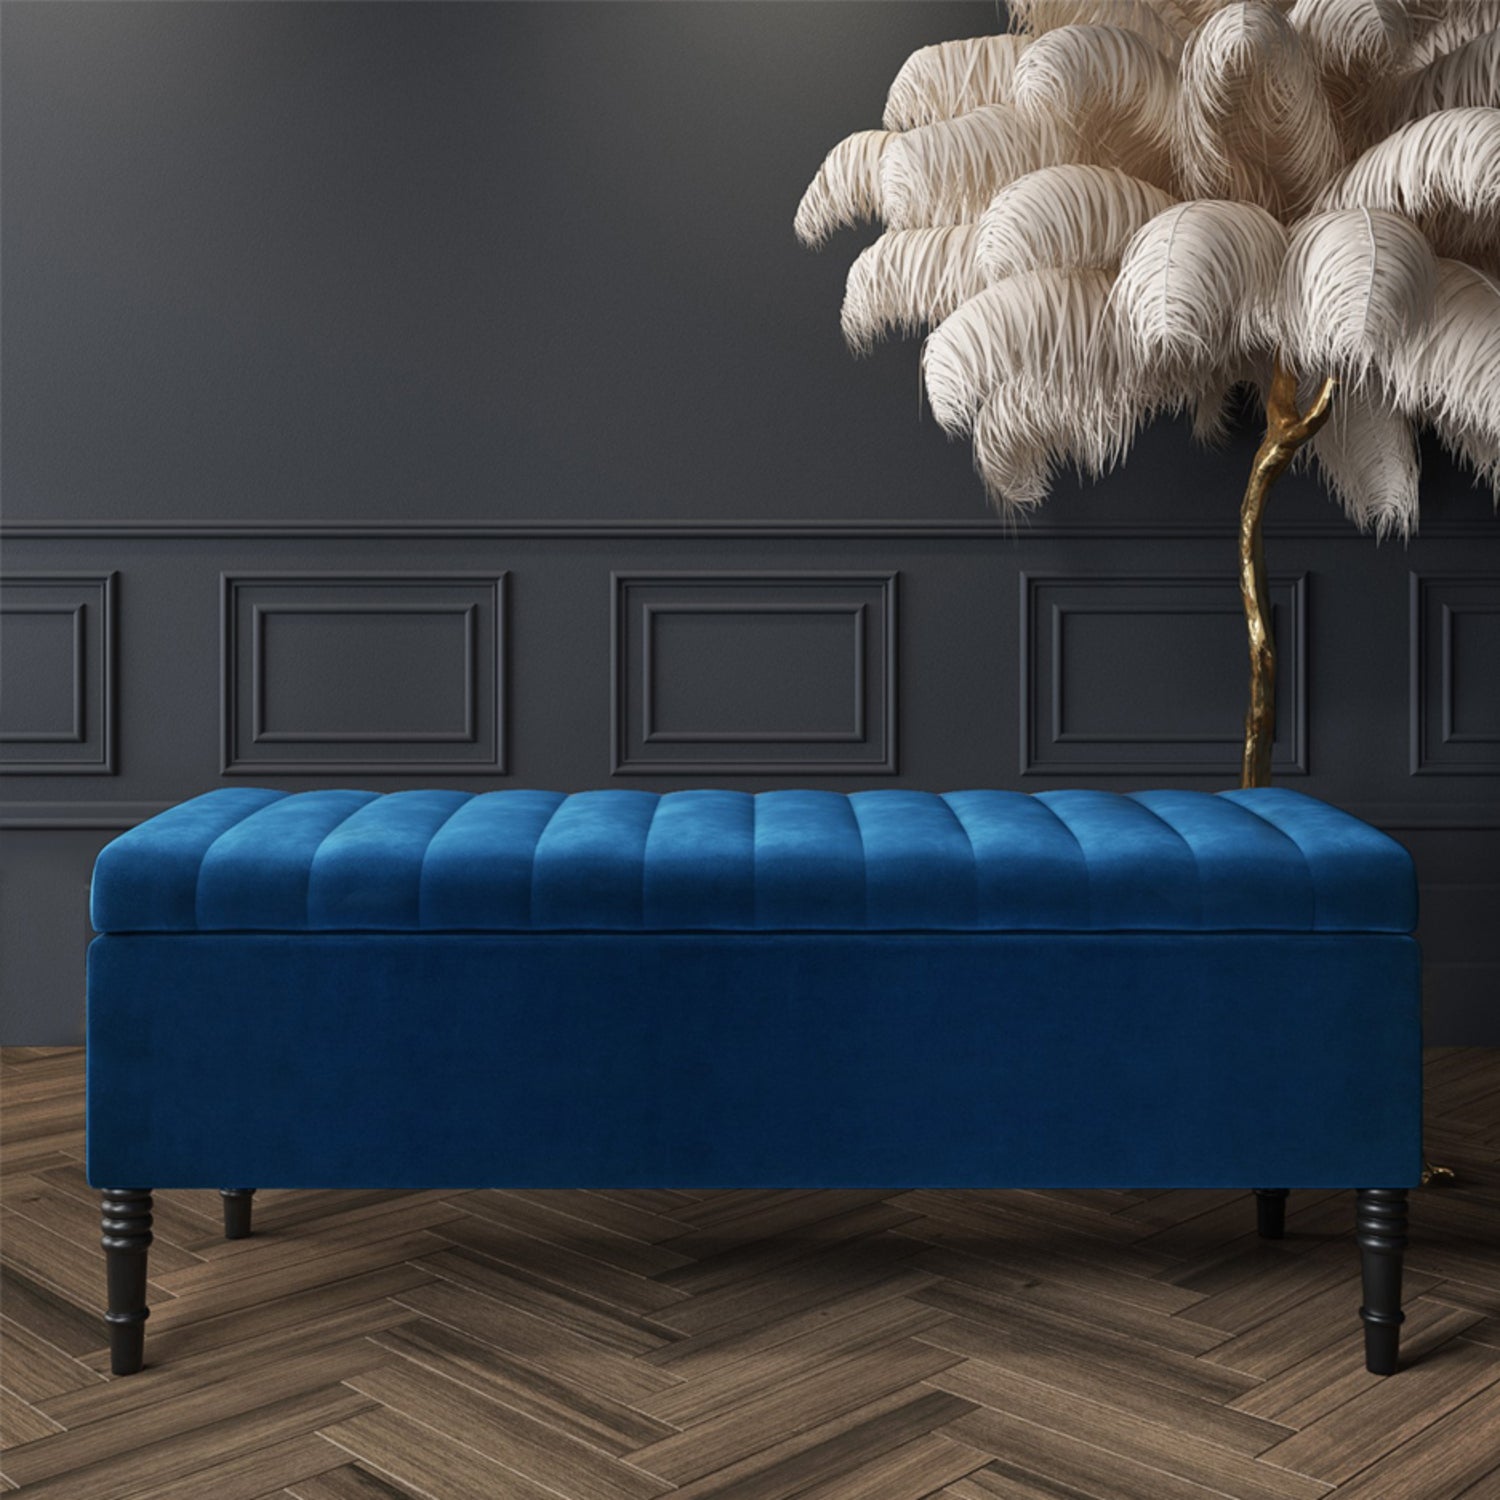 Luxurious Sapphire Blue Velvet Bench with Storage